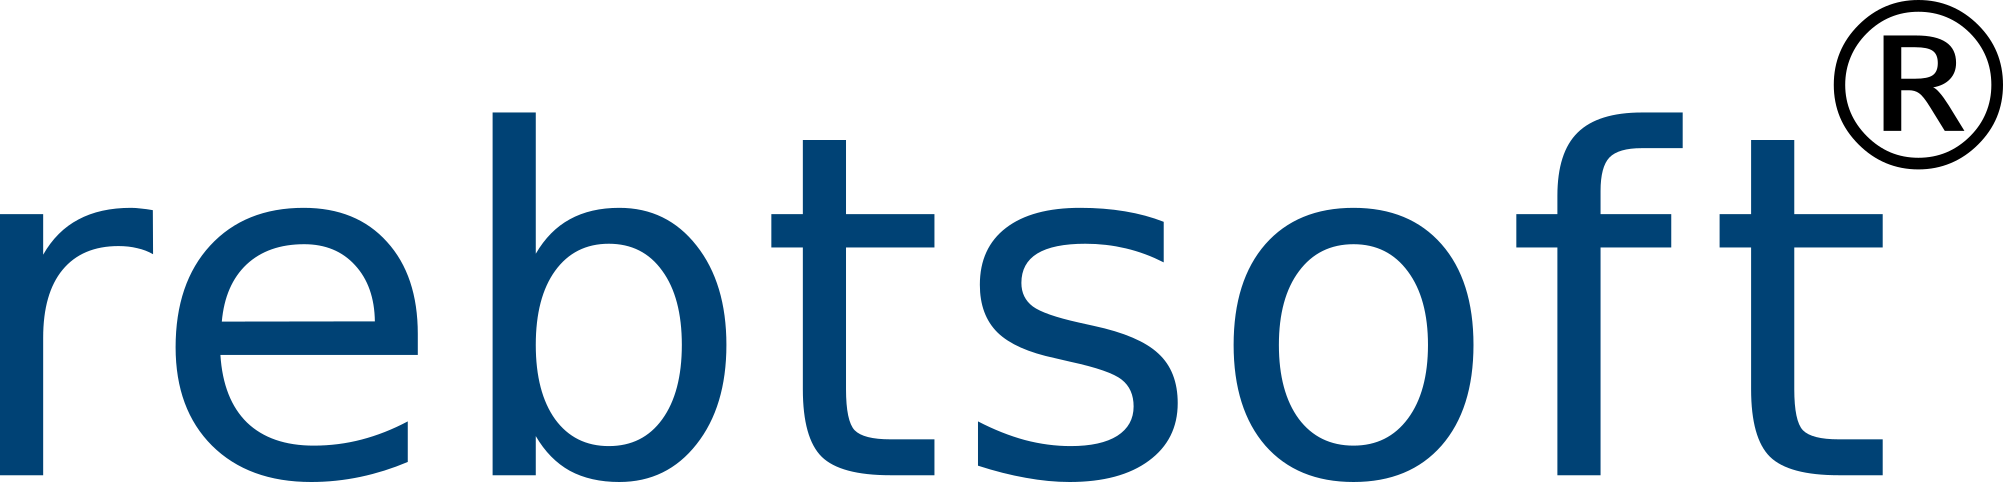 rebtsoft Logo